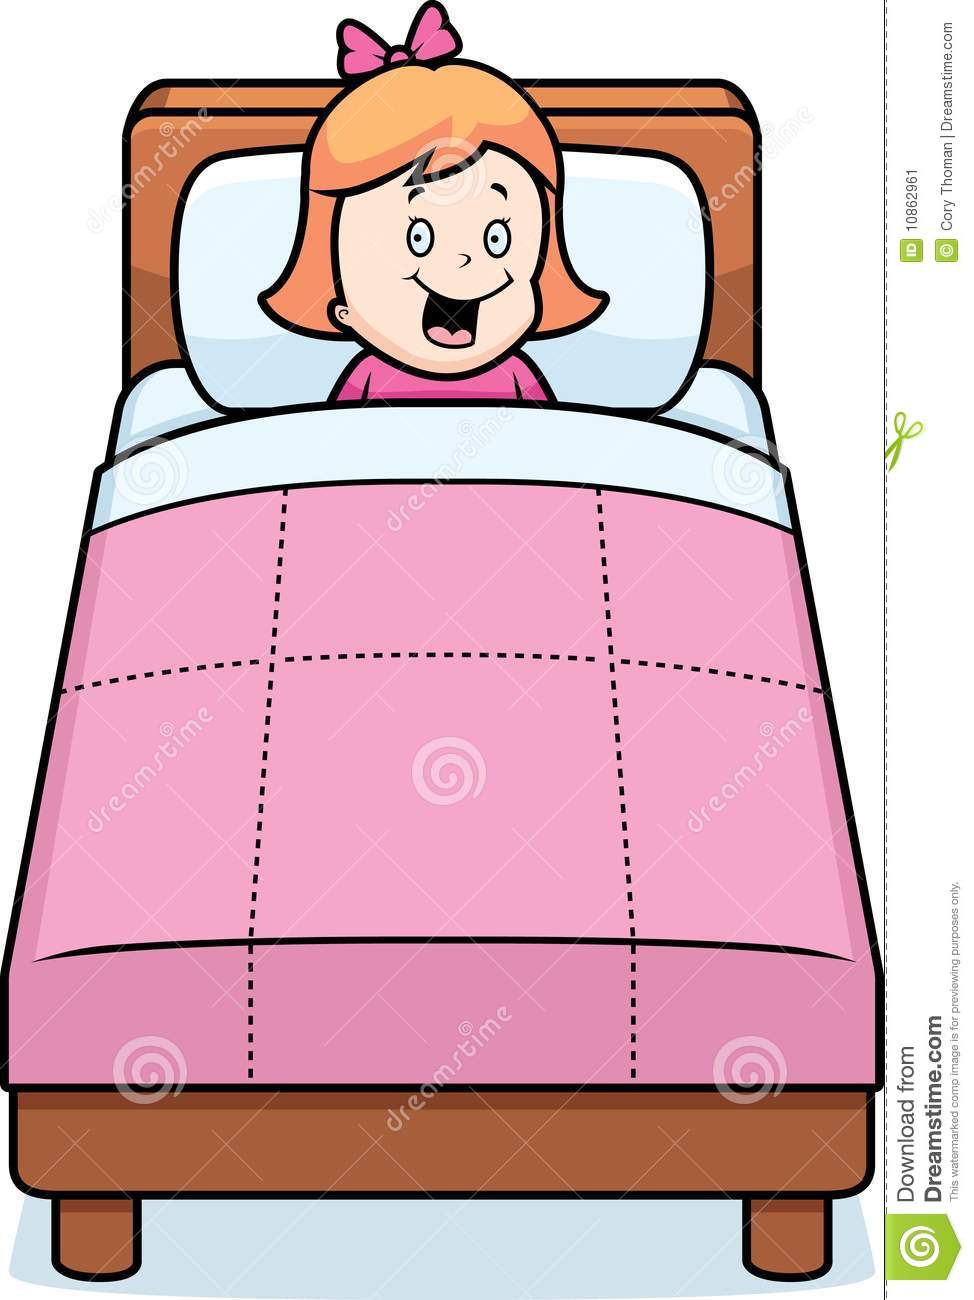 clipart bed cartoon